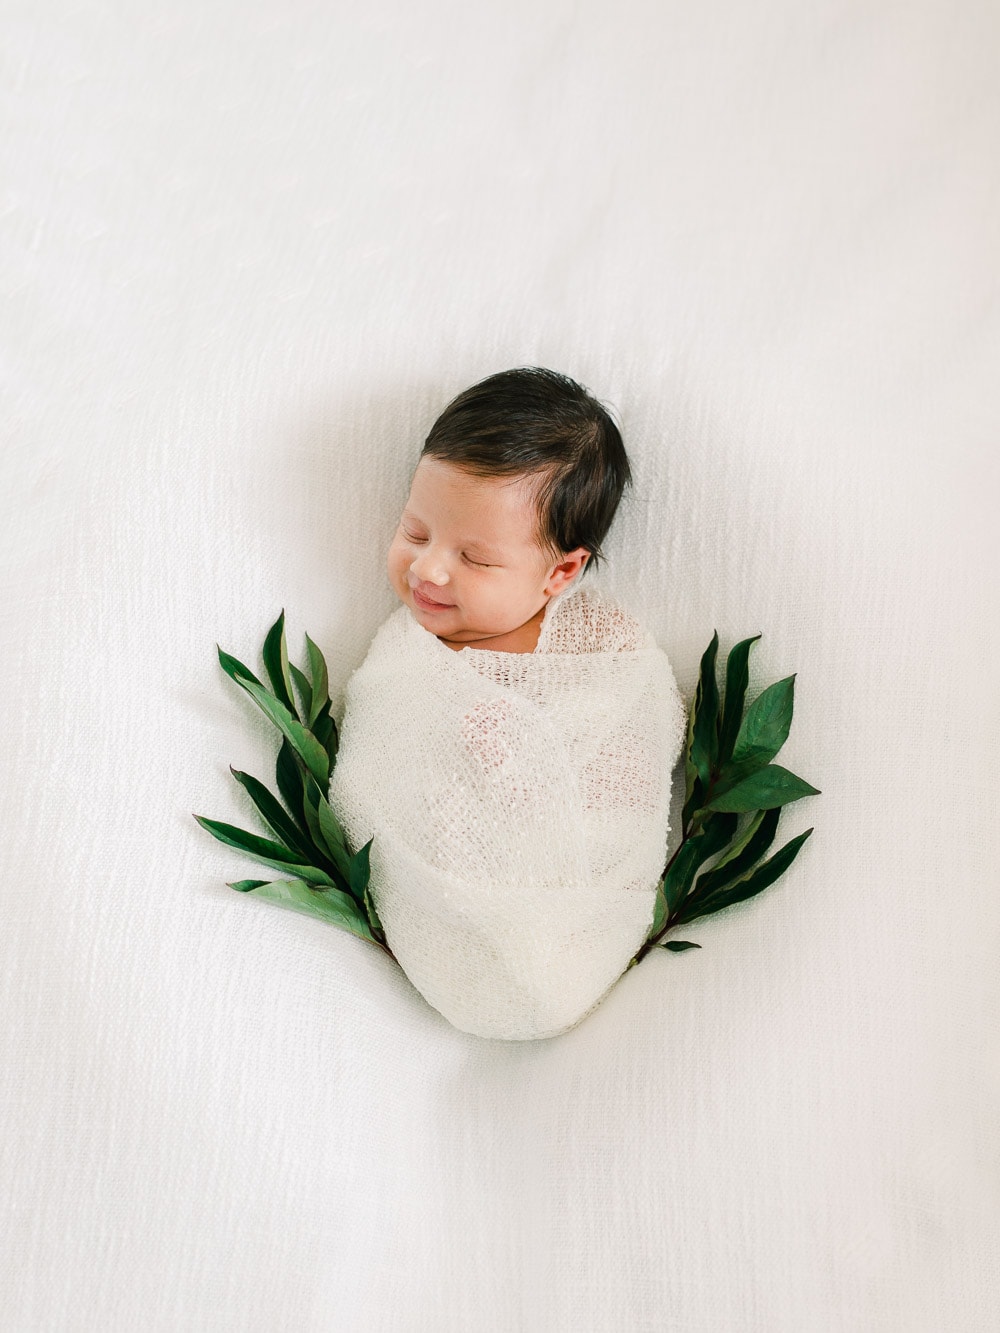 Newborn baby girl, Cleveland Newborn Photography, In-home newborn photography photo inspiration by Juliana Kaderbek Photography